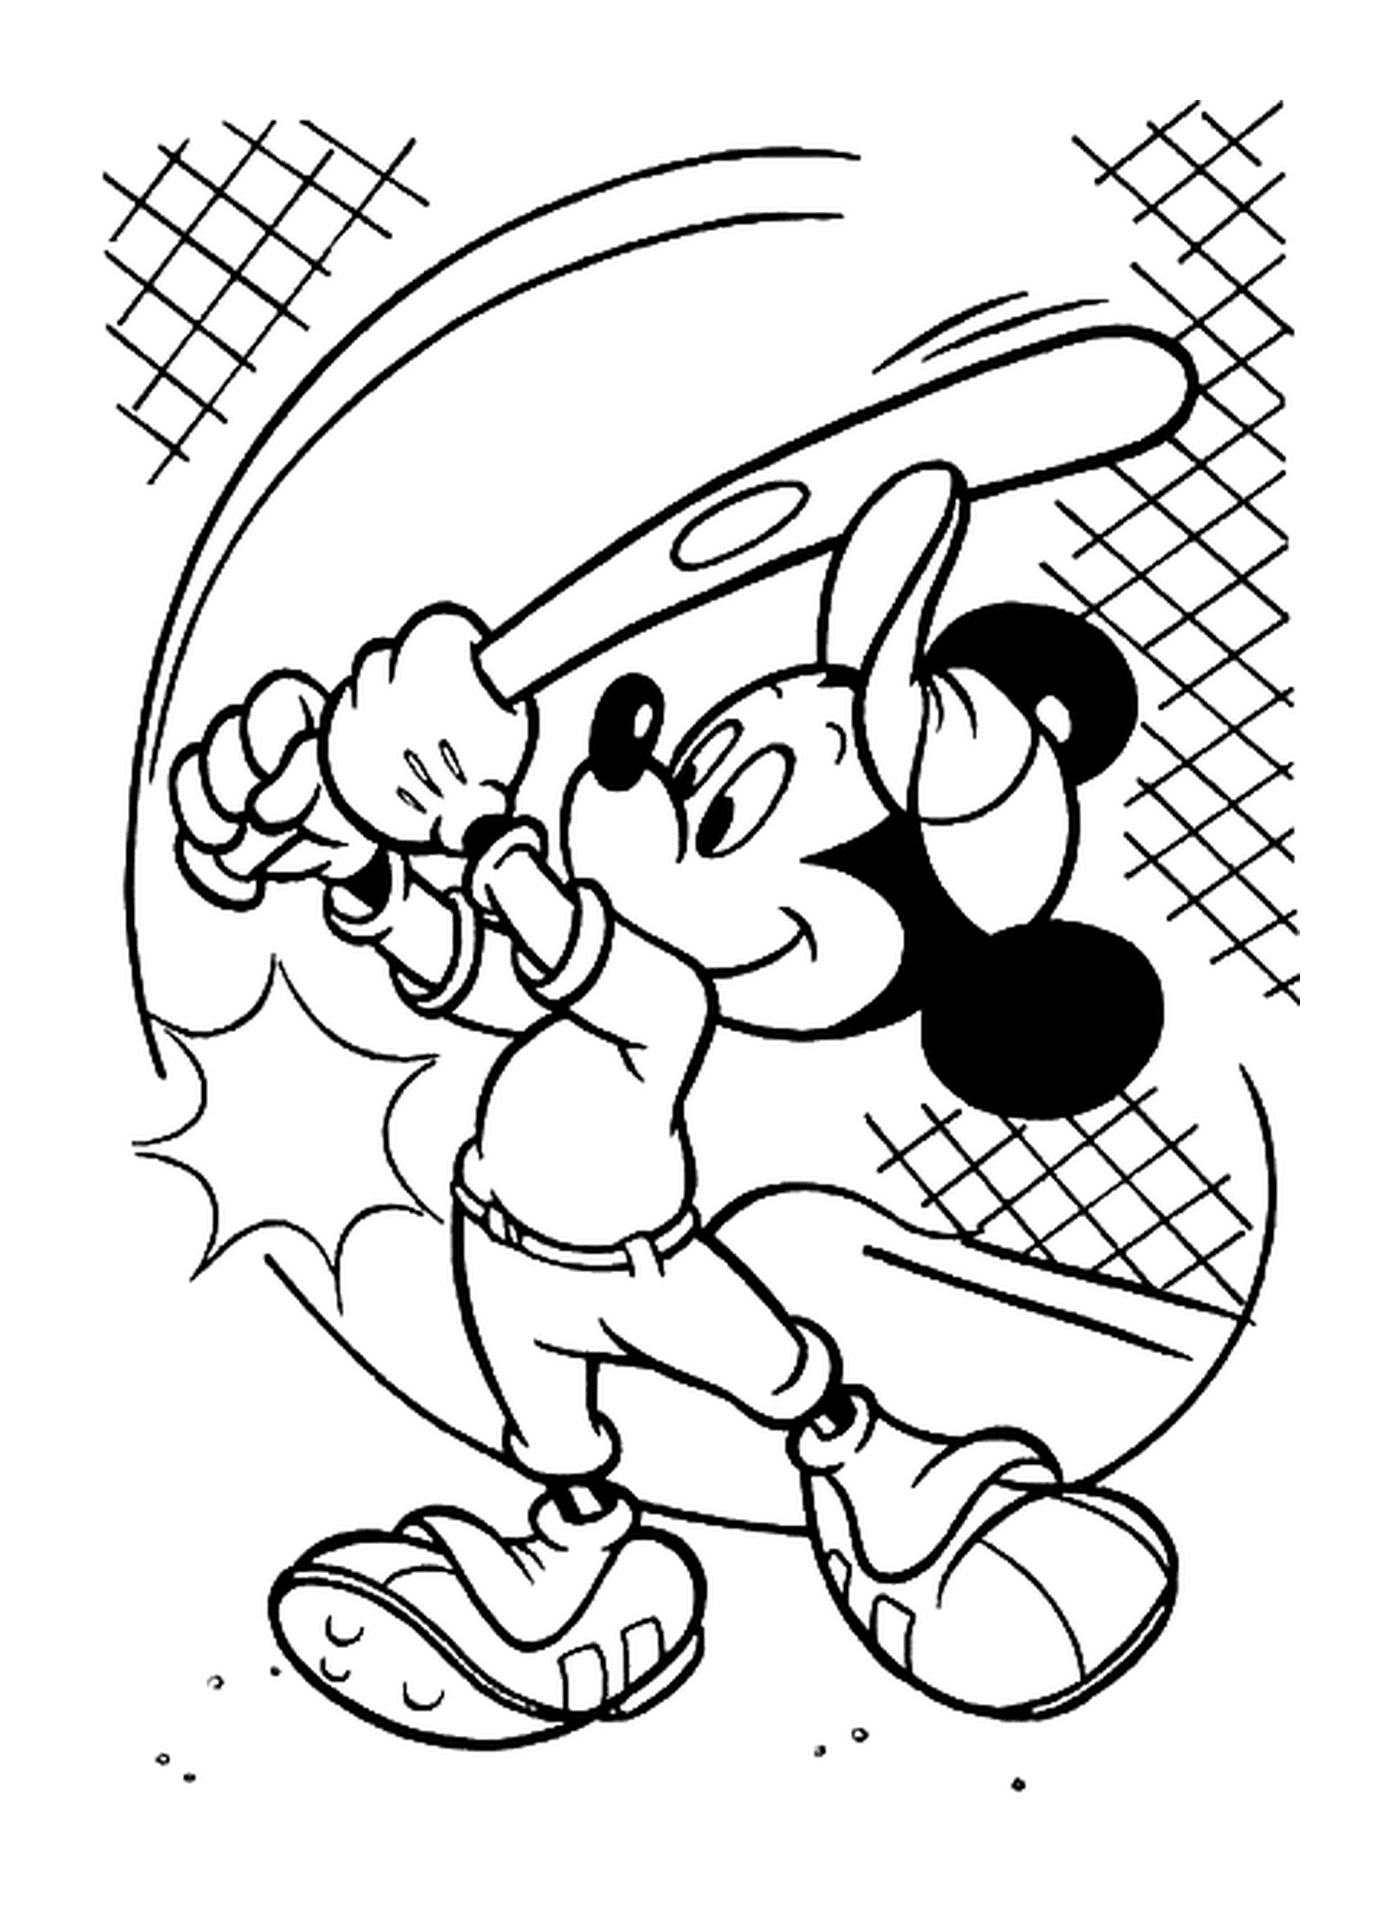  Drawing of Mickey playing baseball: holding a baseball bat 